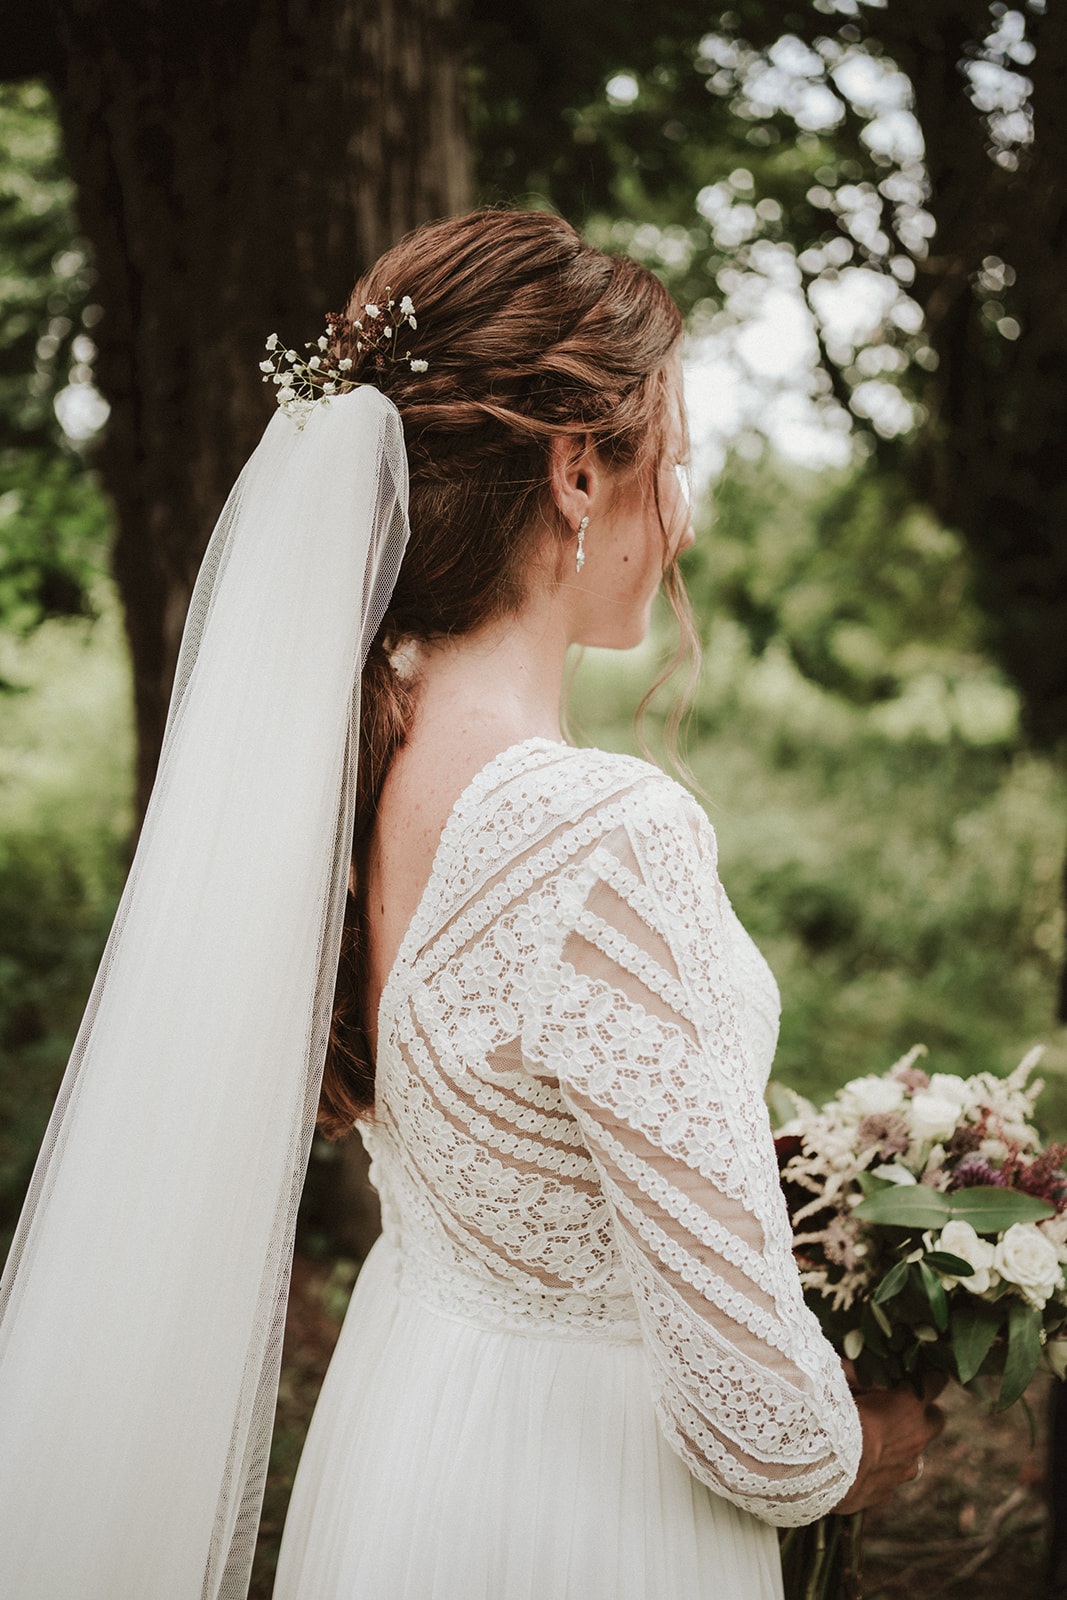 Detalles del vestido de la novia